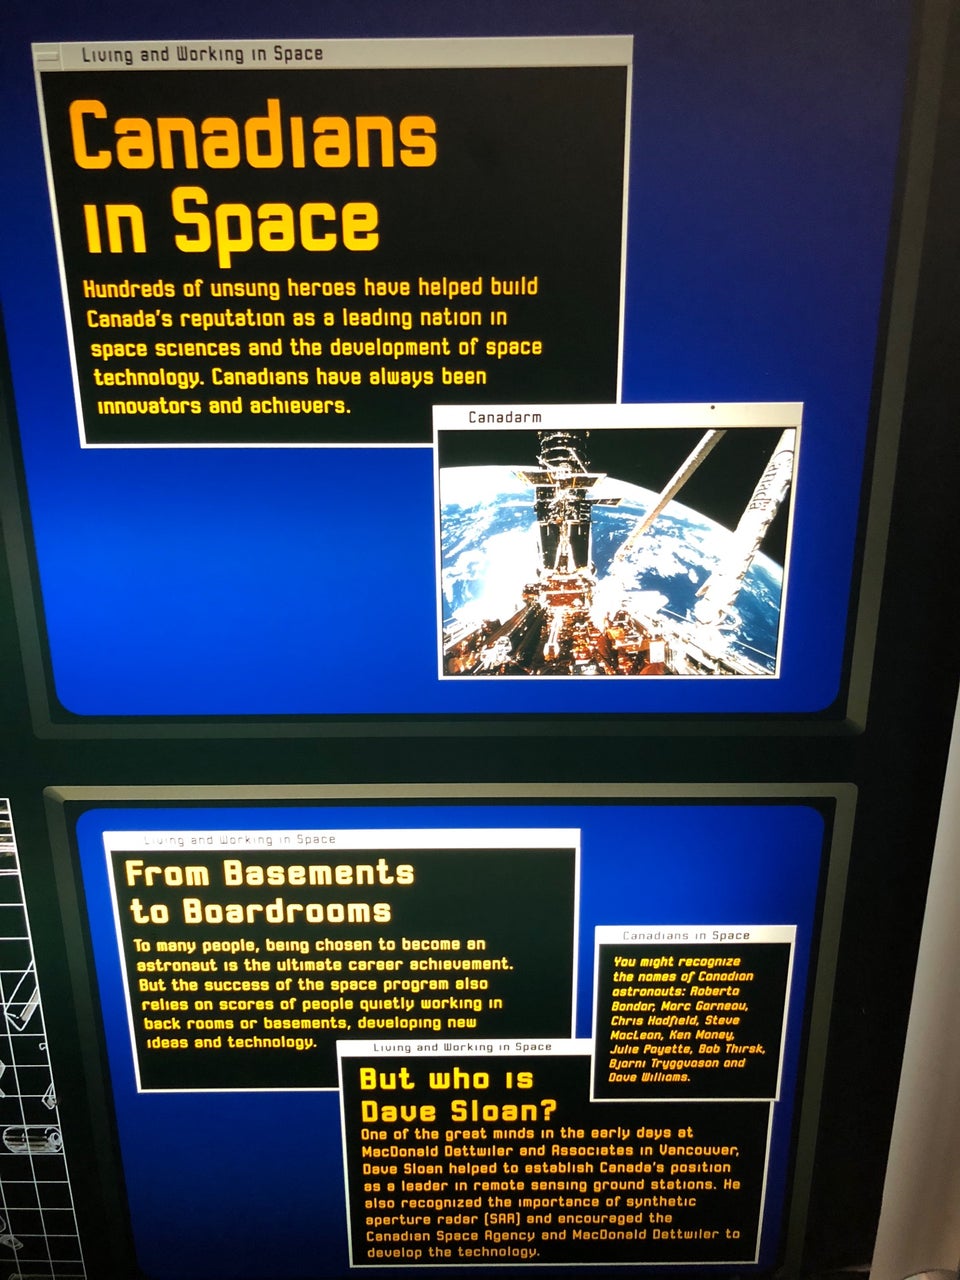 Photo of H.R. MacMillan Space Center